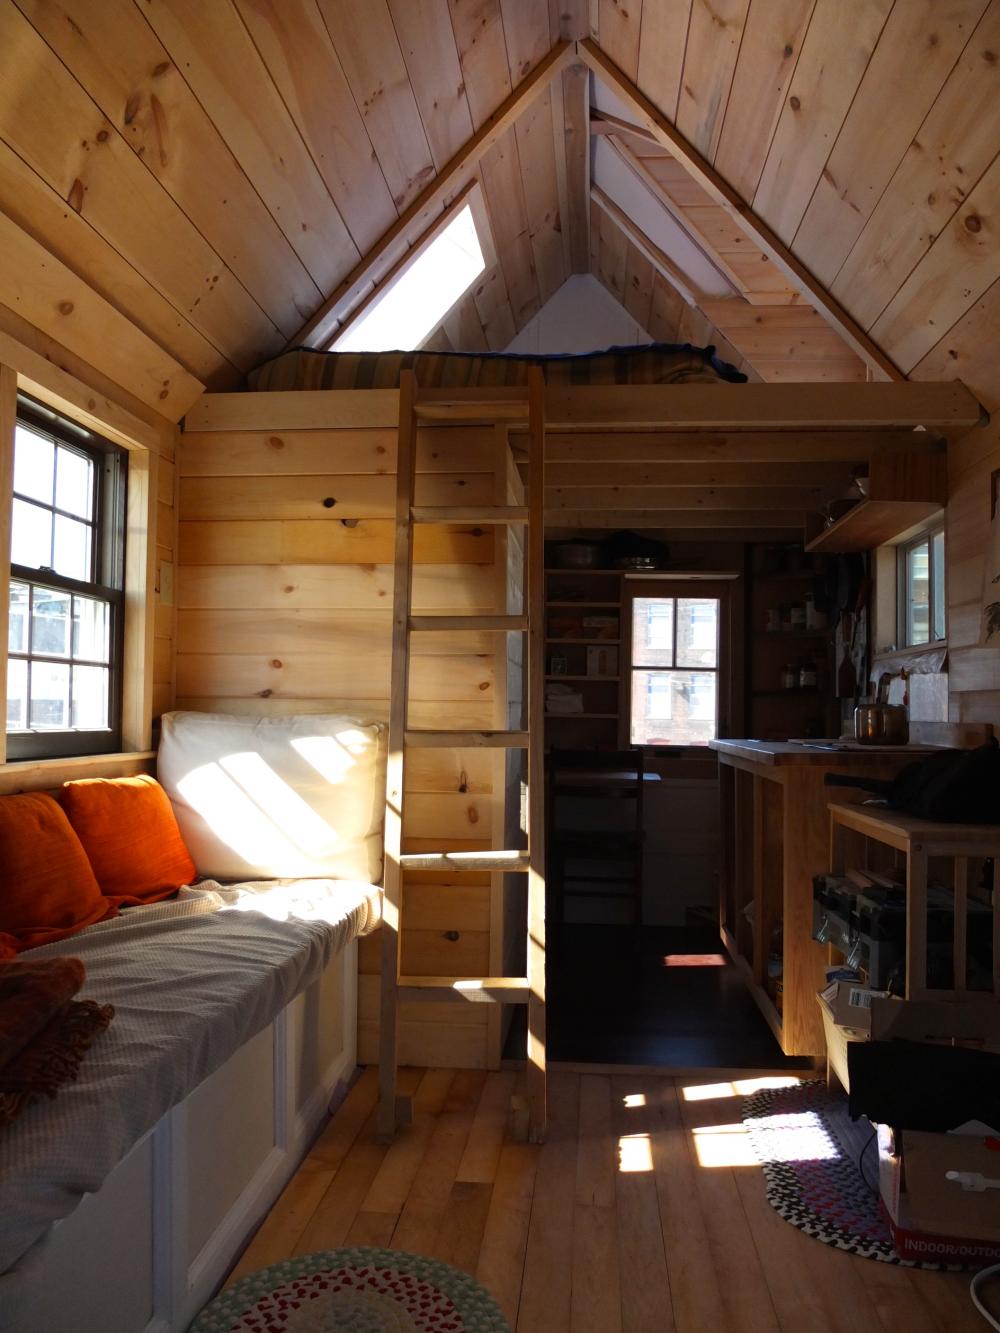 Amazing drafty and skylight windows for farmhouse attic room